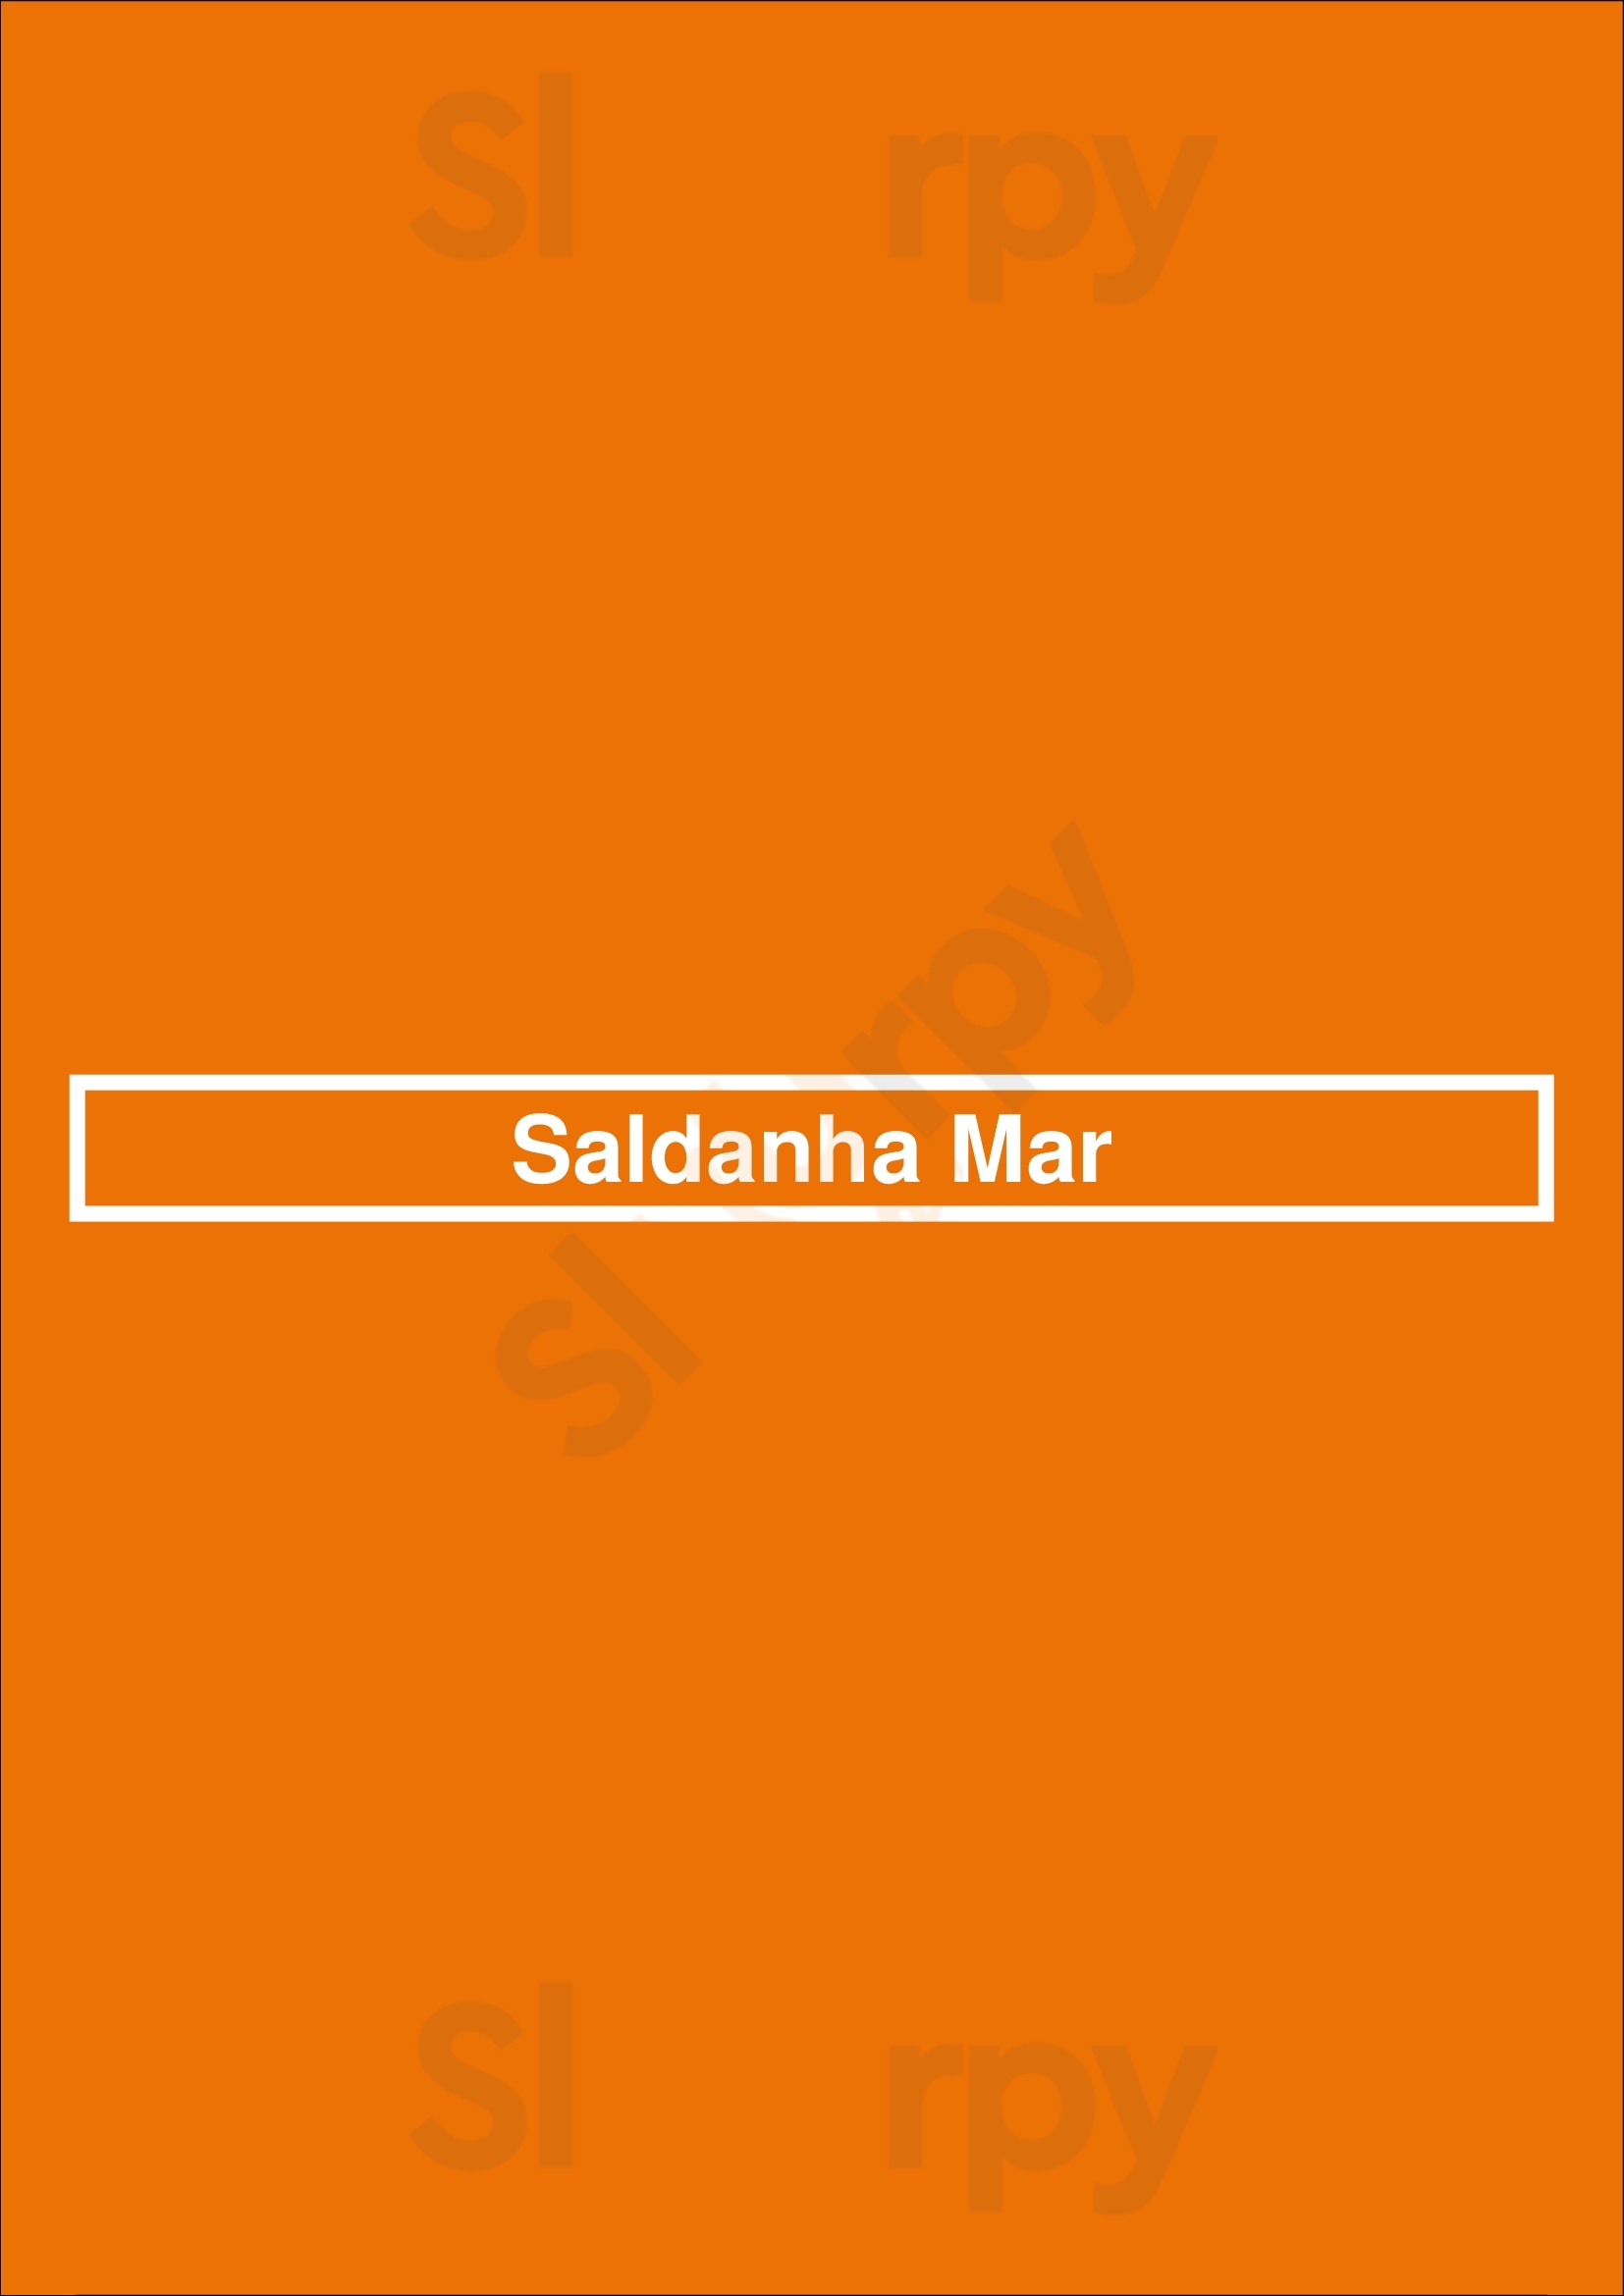 Saldanha Mar Lisboa Menu - 1